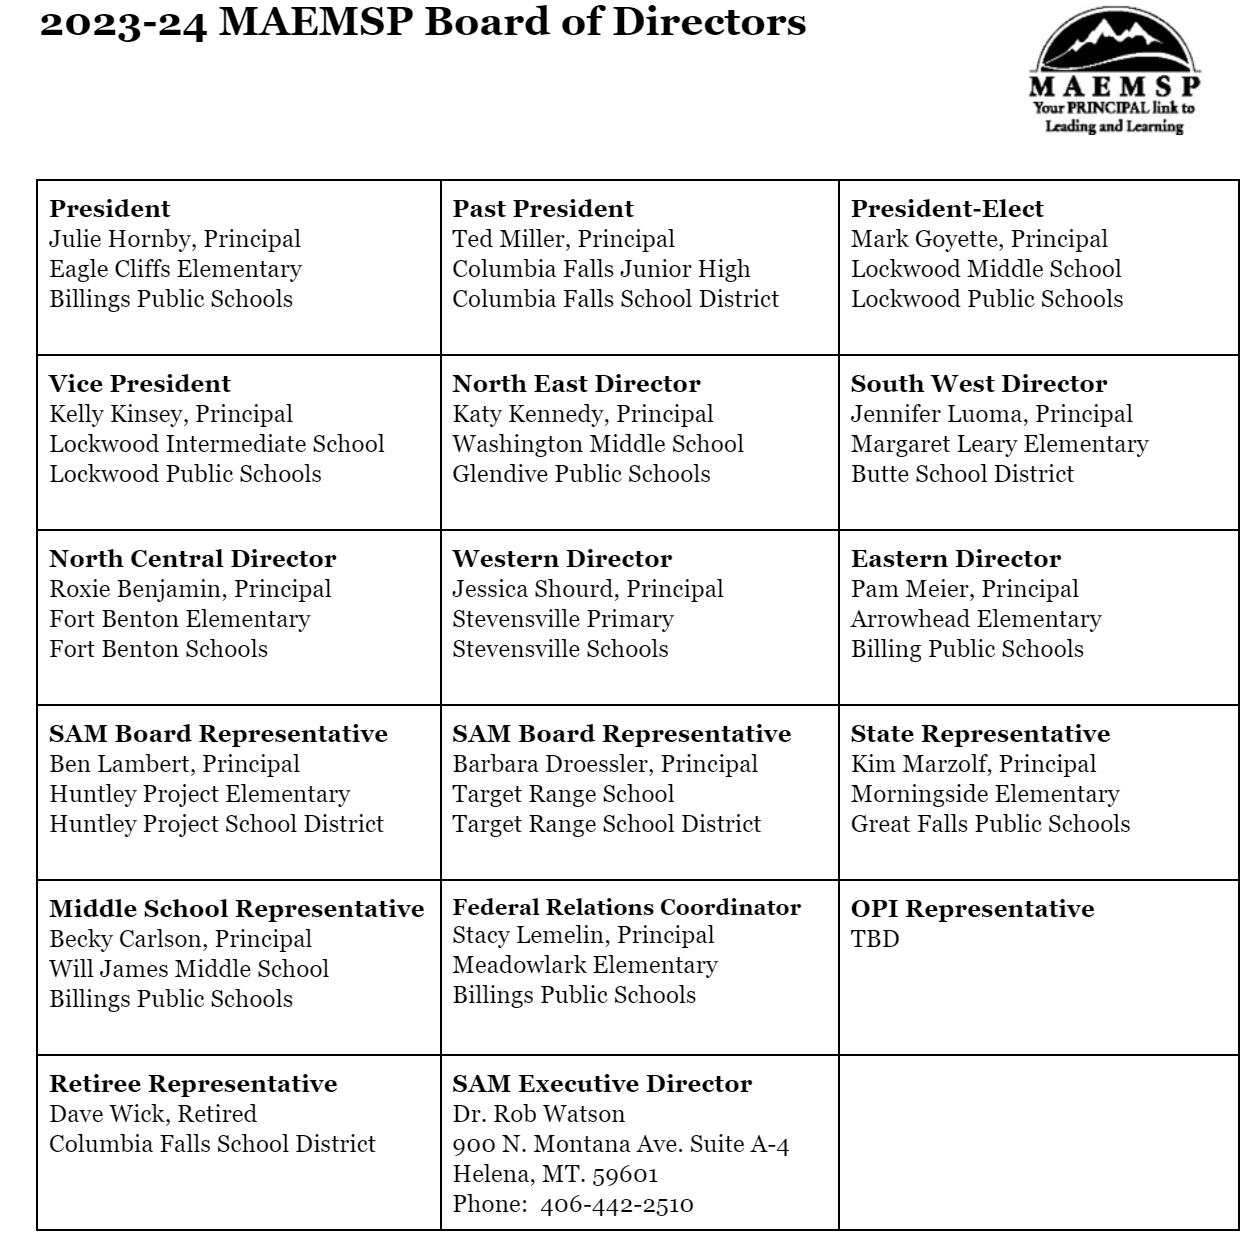 2023-24 MAEMSP Board - Public.PNG - 229.76 Kb